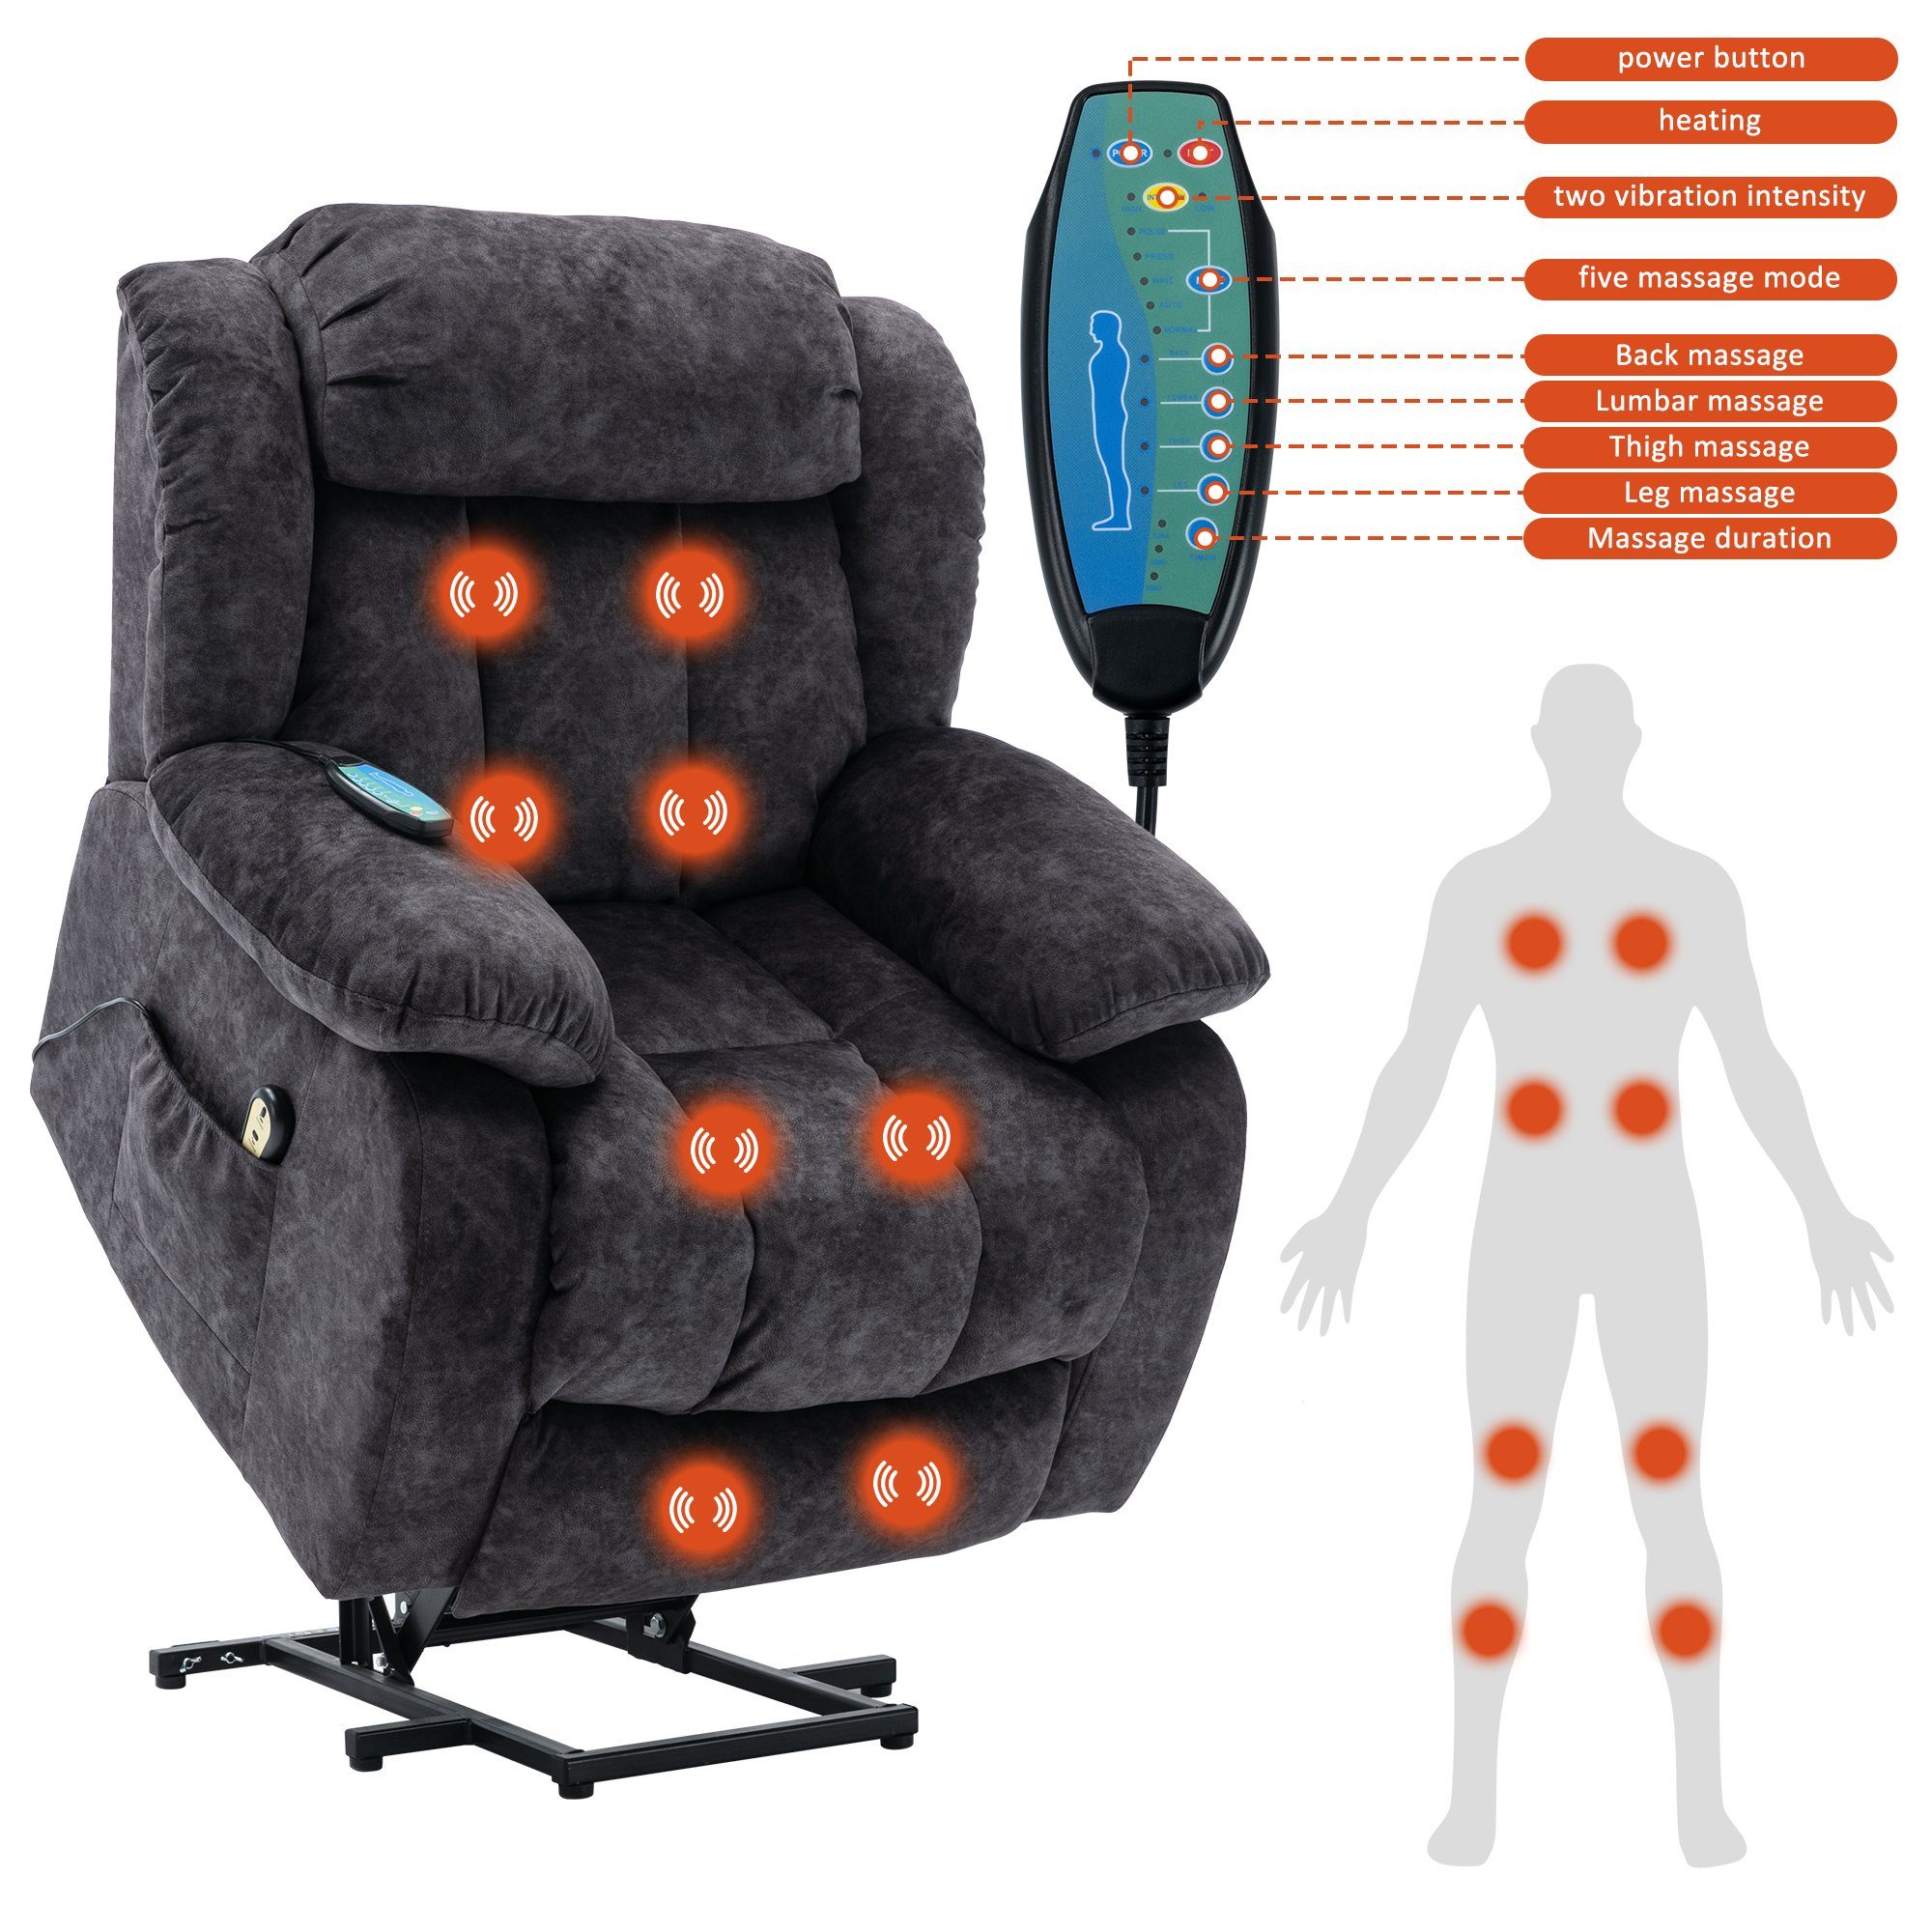 USB-verstellbar, Merax Grau mit und Massagesesel beheizt TV-Sessel, Vibration, Wärme